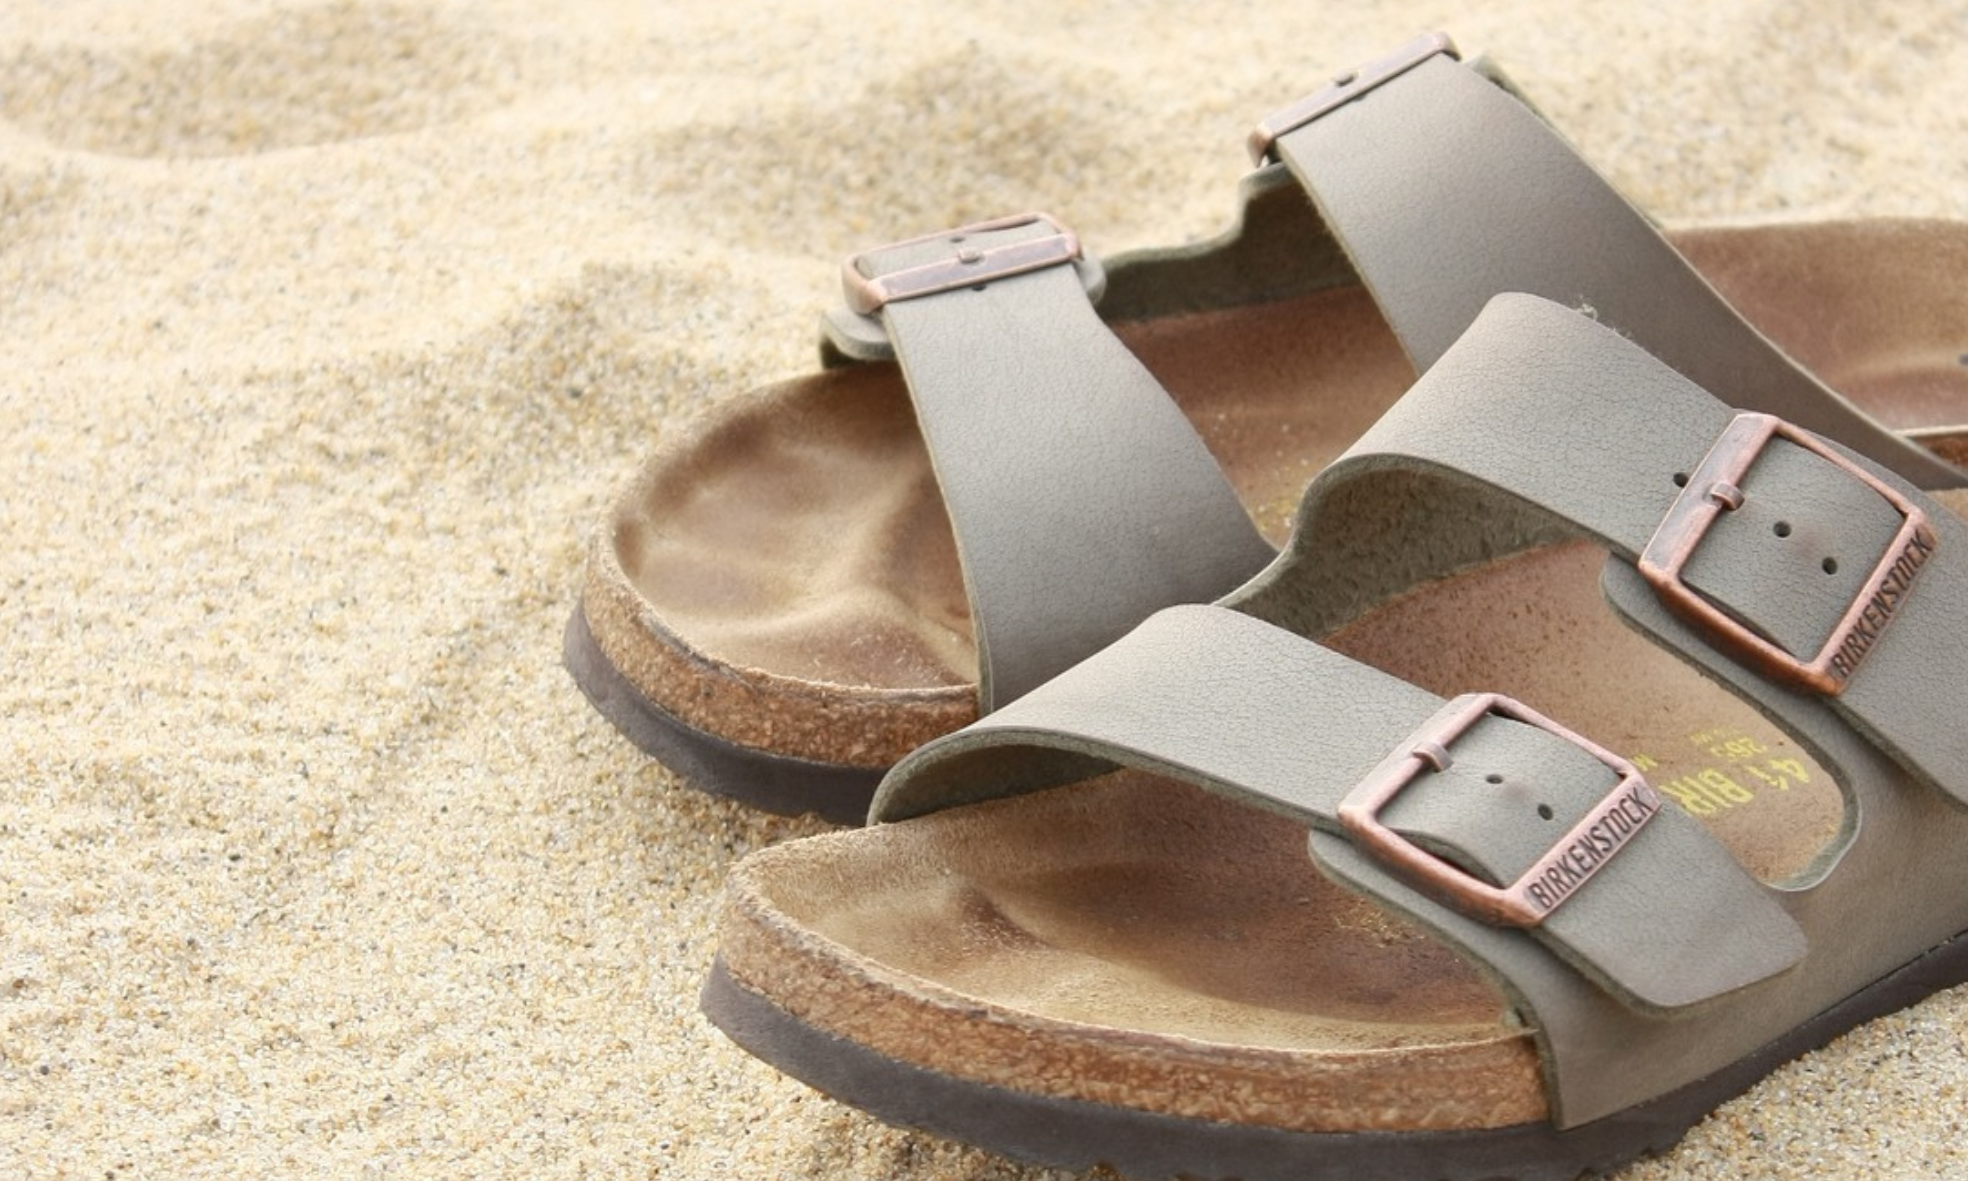 Birkenstock sandals on sand